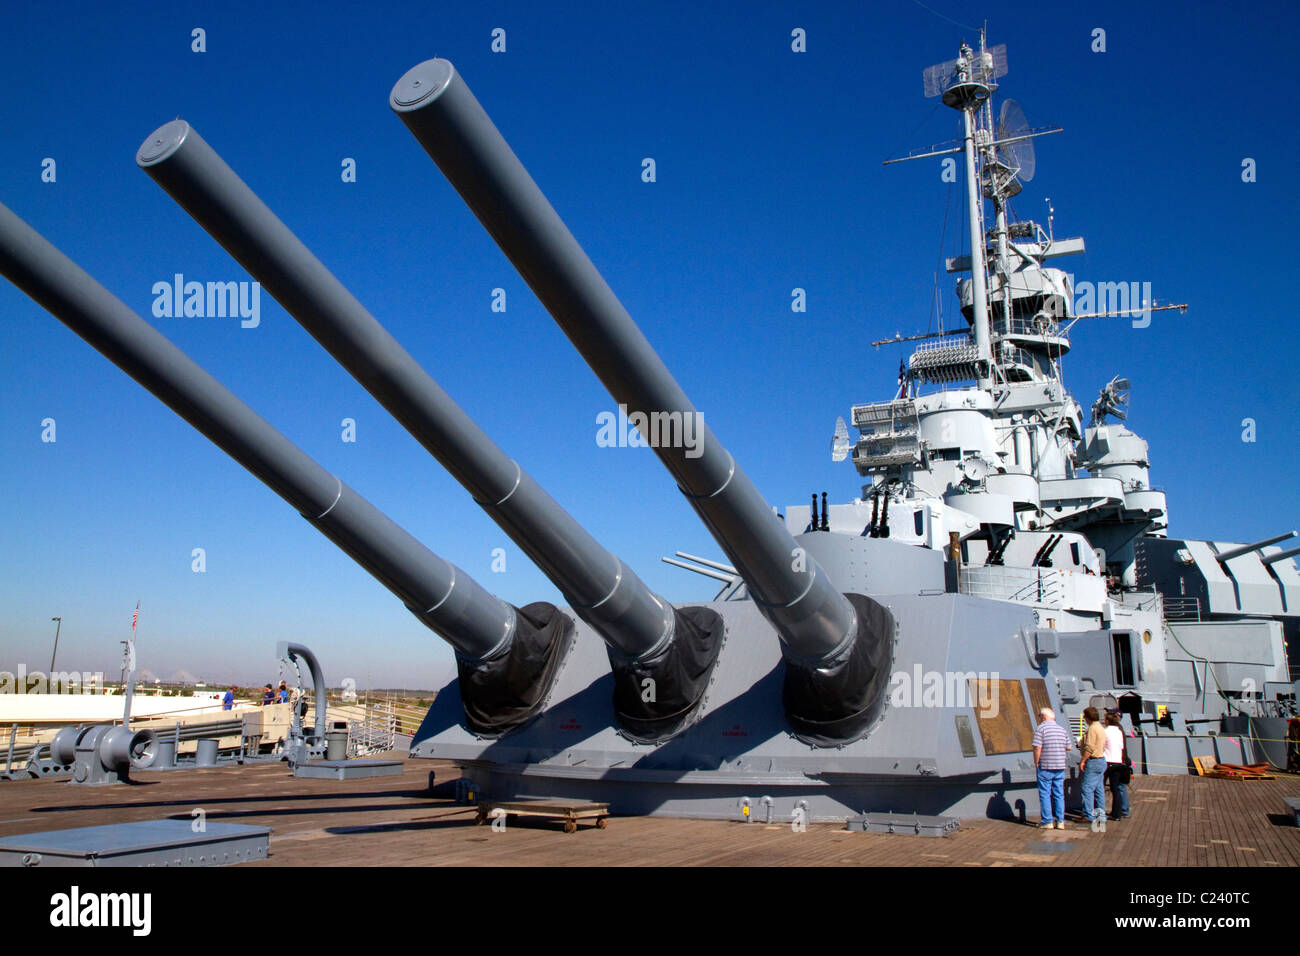 Au cuirassé USS Alabama Battleship Memorial Park, Mobile, Alabama, États-Unis. Banque D'Images